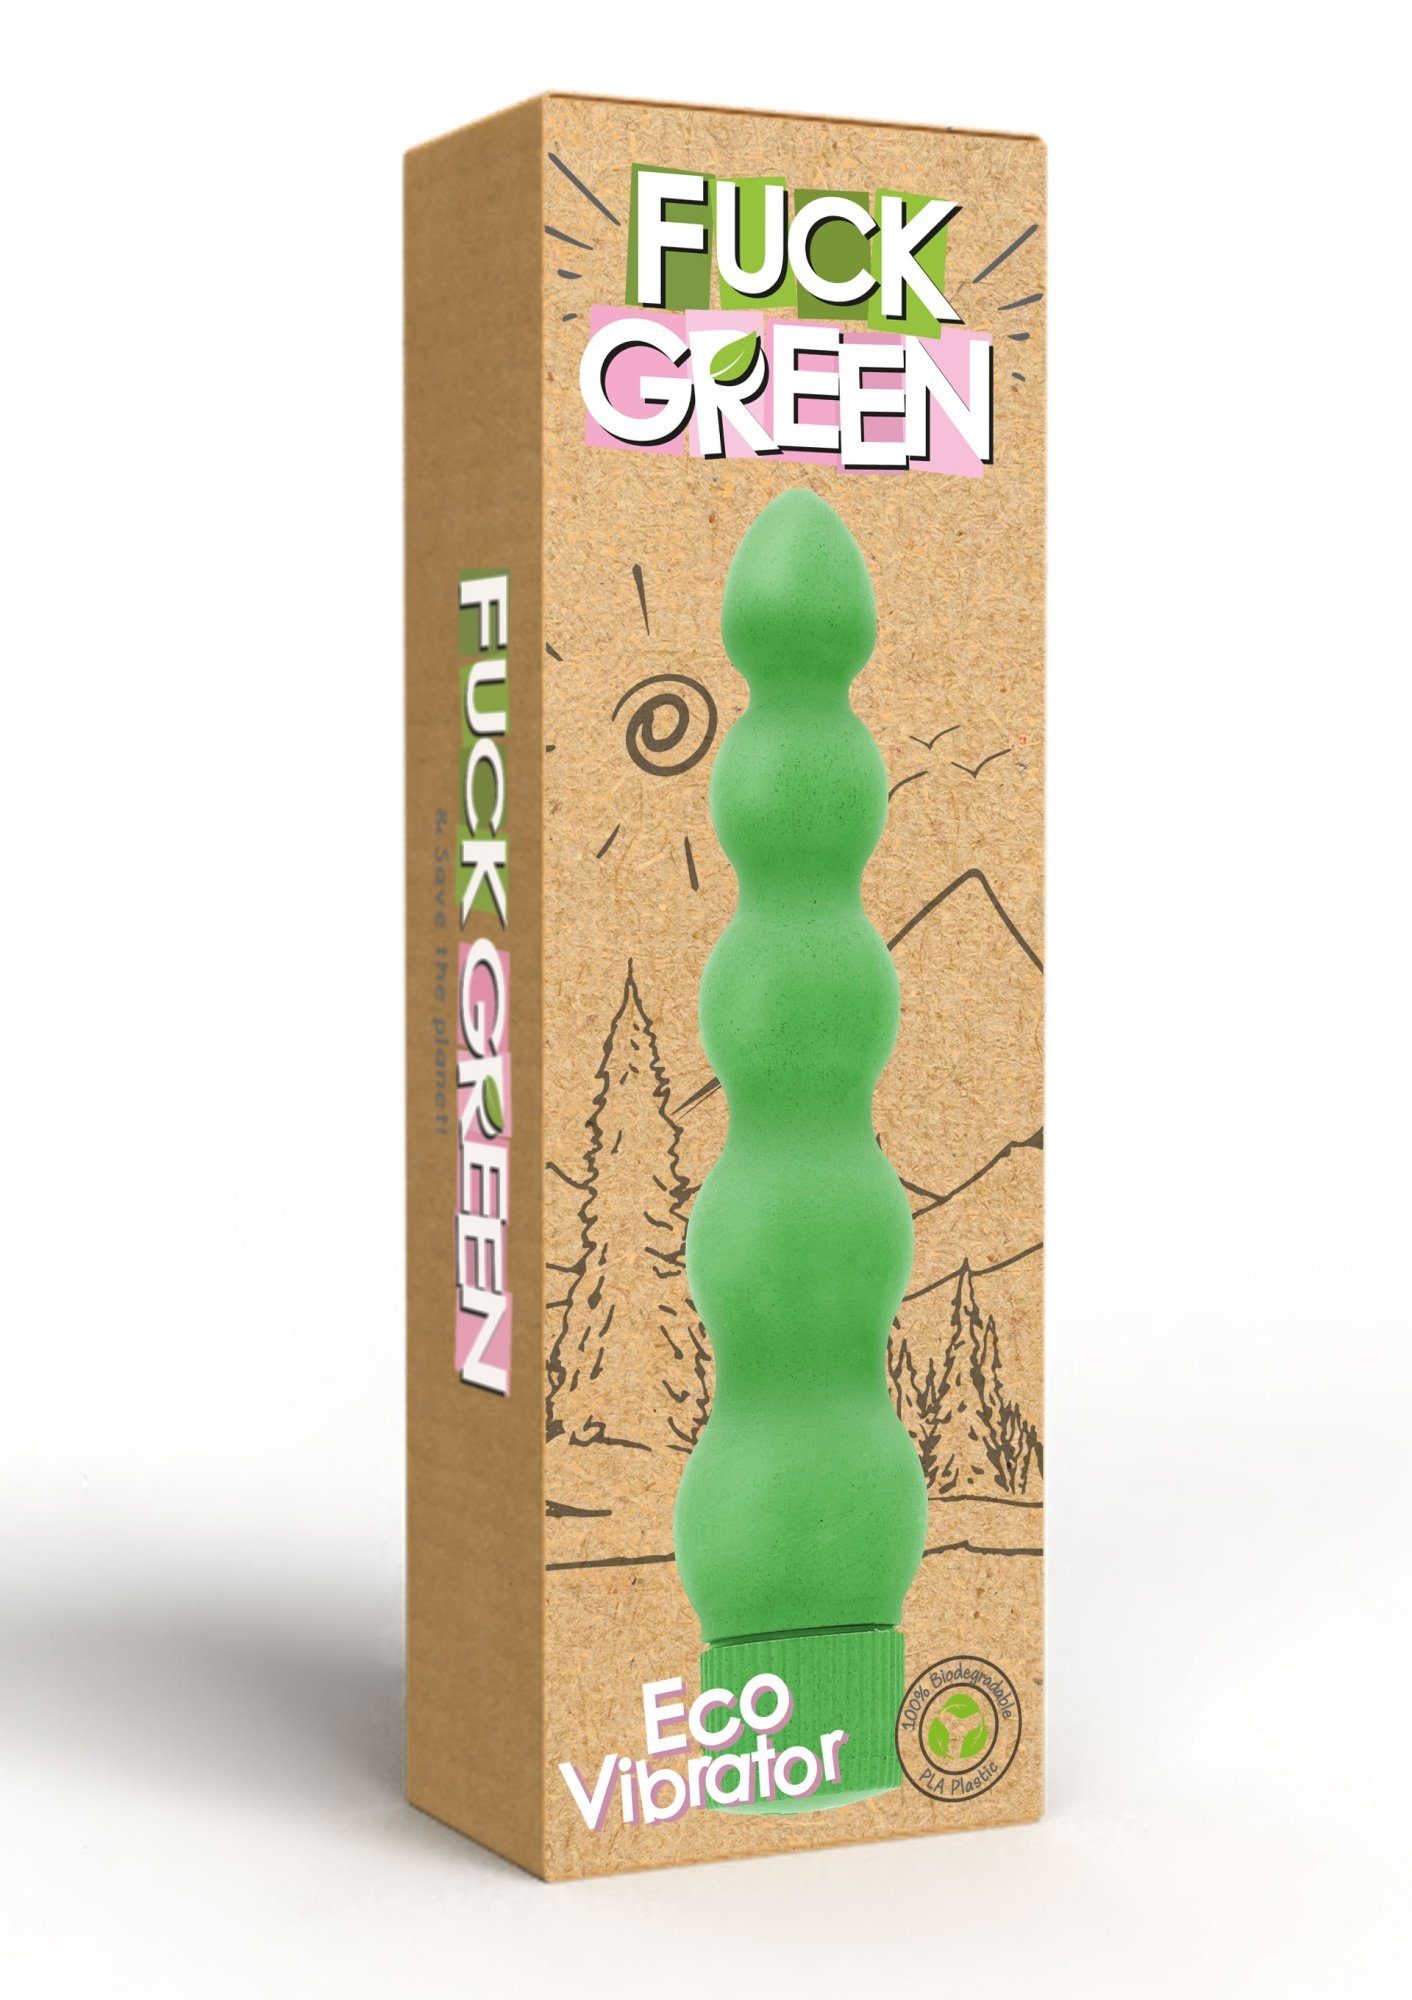 100 Vibrator vegan - abbaubar biologisch % Vibrator grün GREEN FUCK